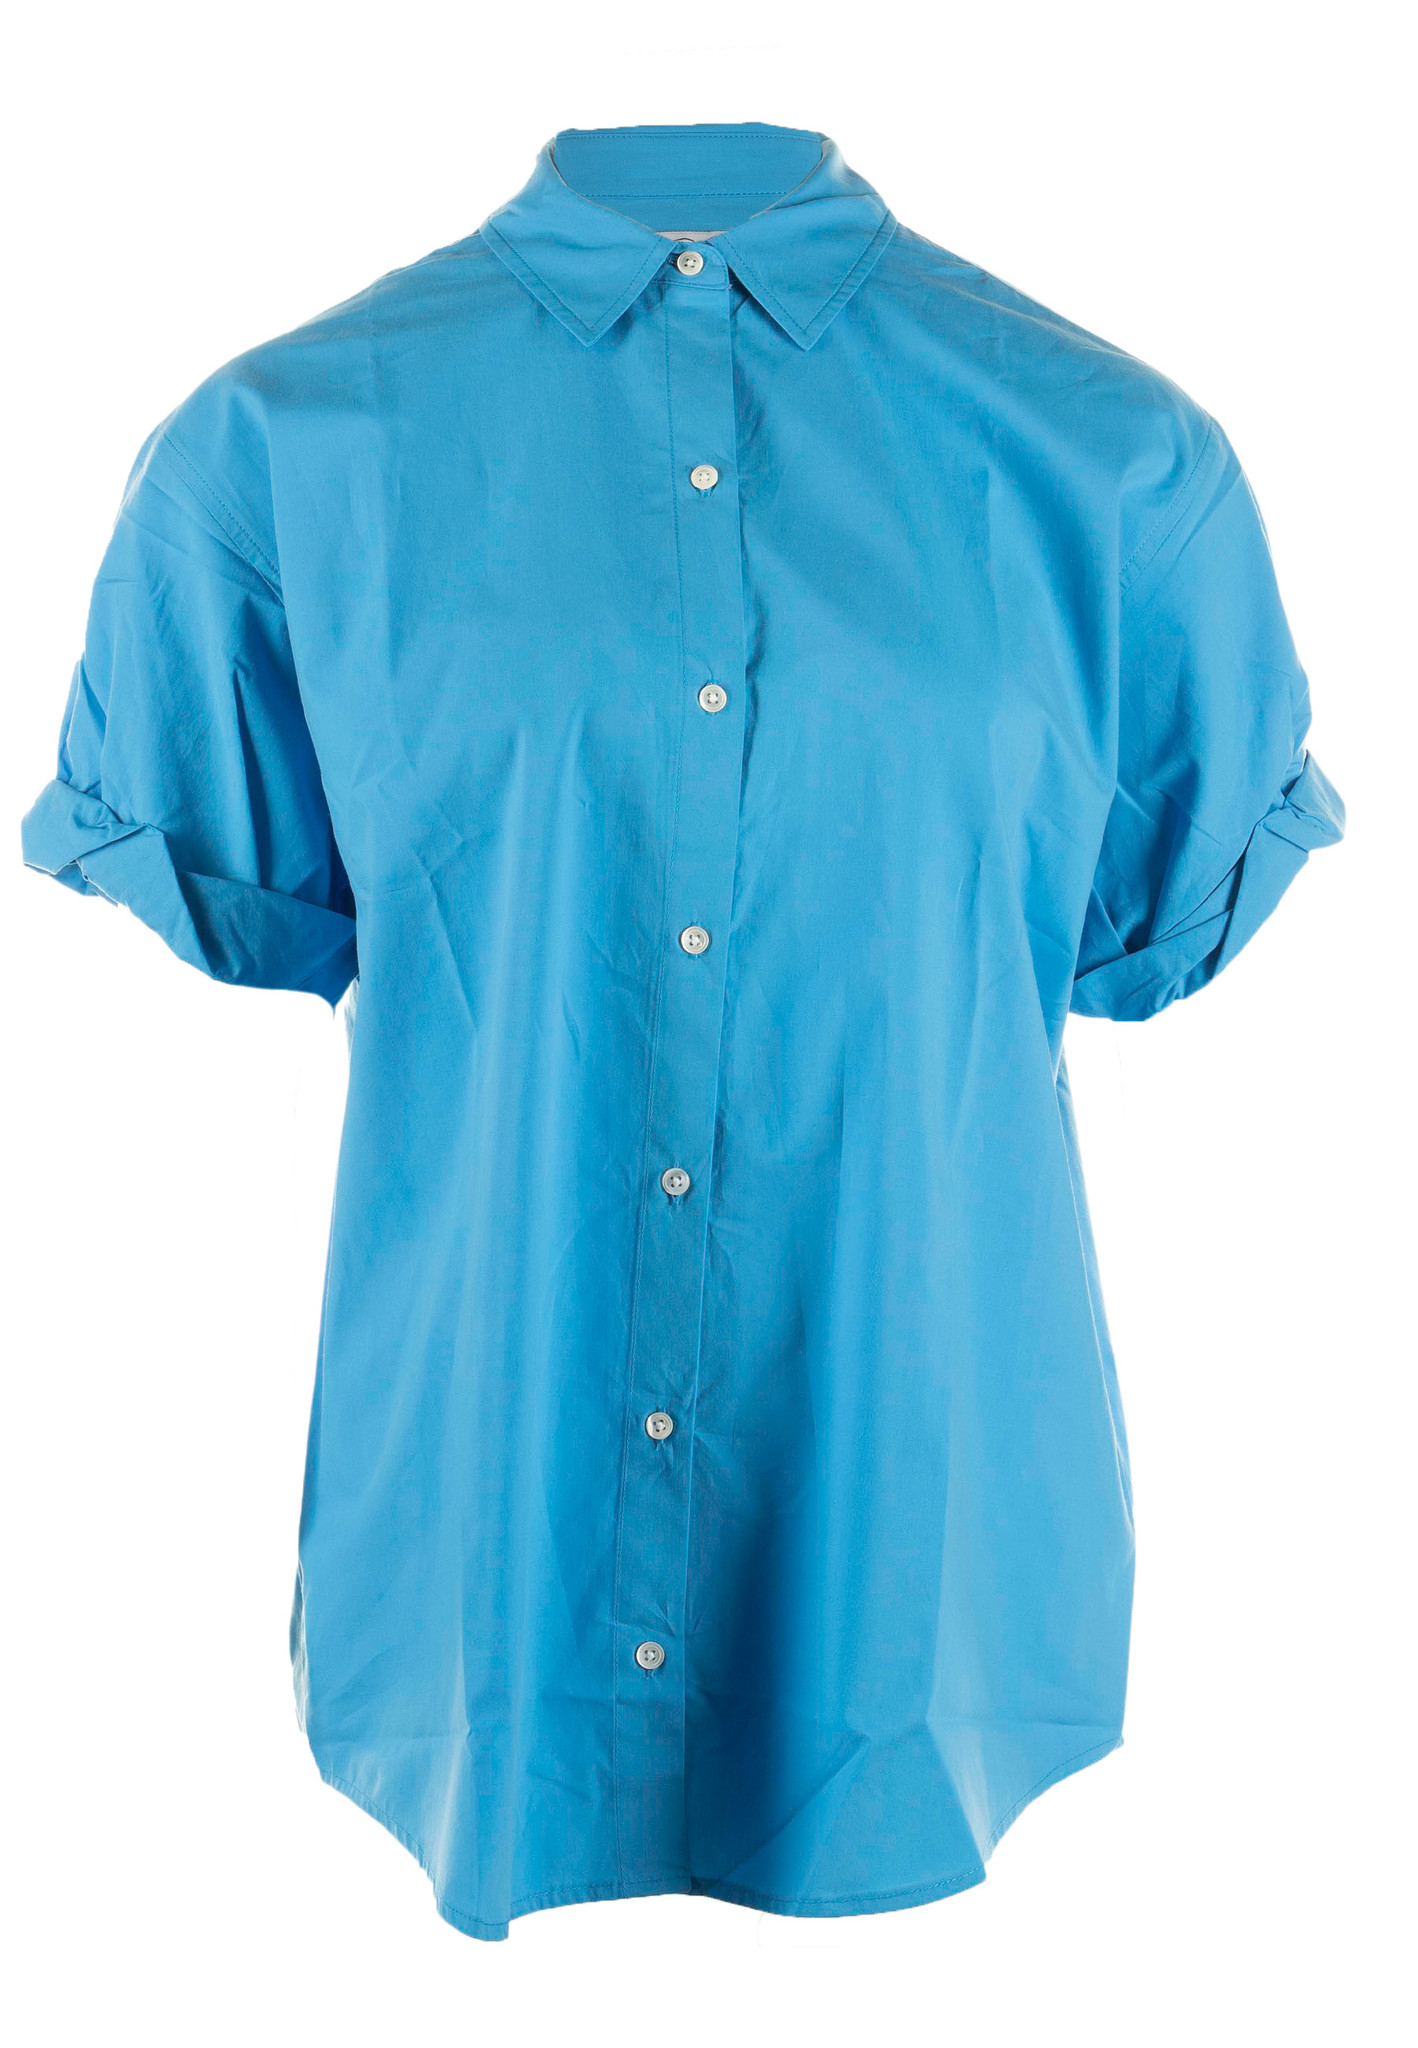 Rails 670-568-434 blouses blauw Dames maat XS